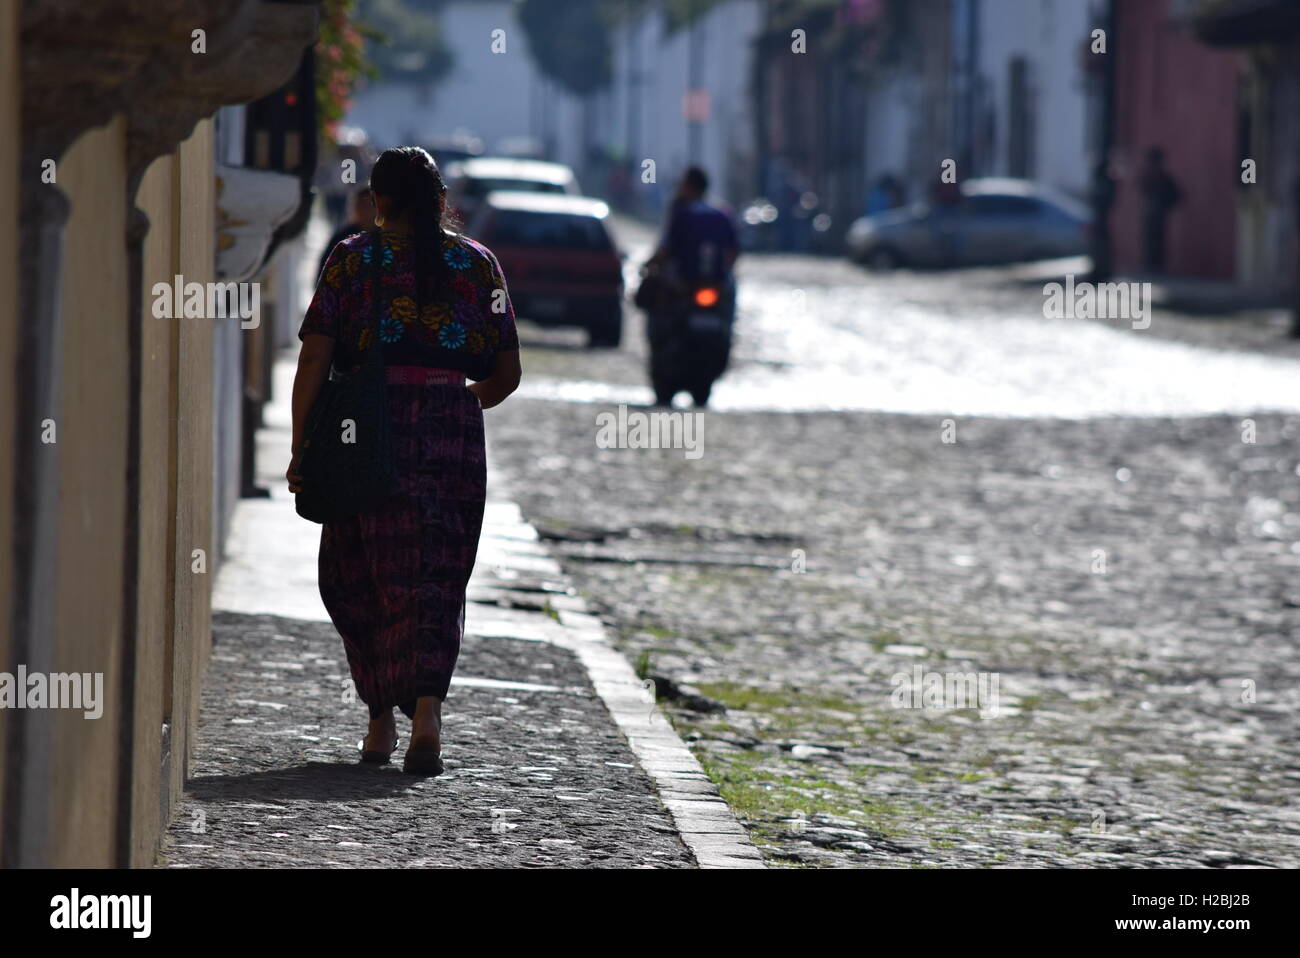 Indigenous woman walking on the street in Antigua, Guatemala Stock Photo